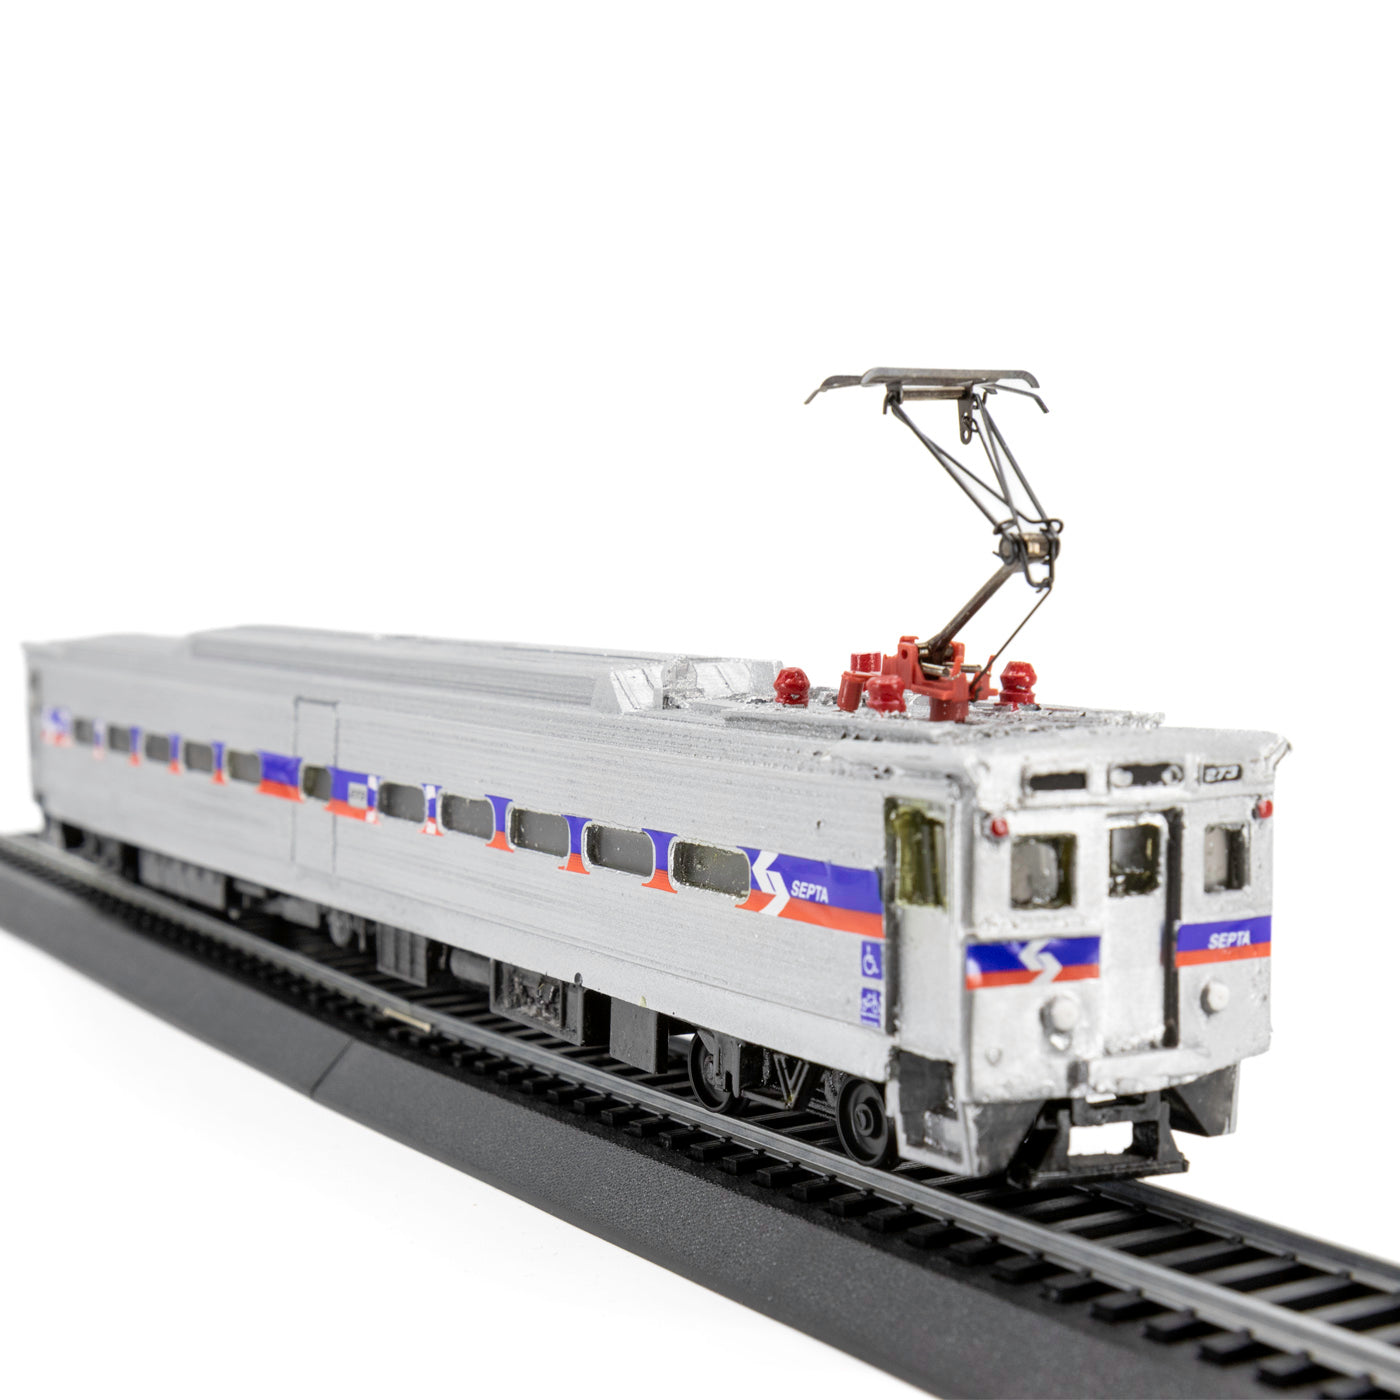 SEPTA Silverliner IV Handcrafted Display Model Train